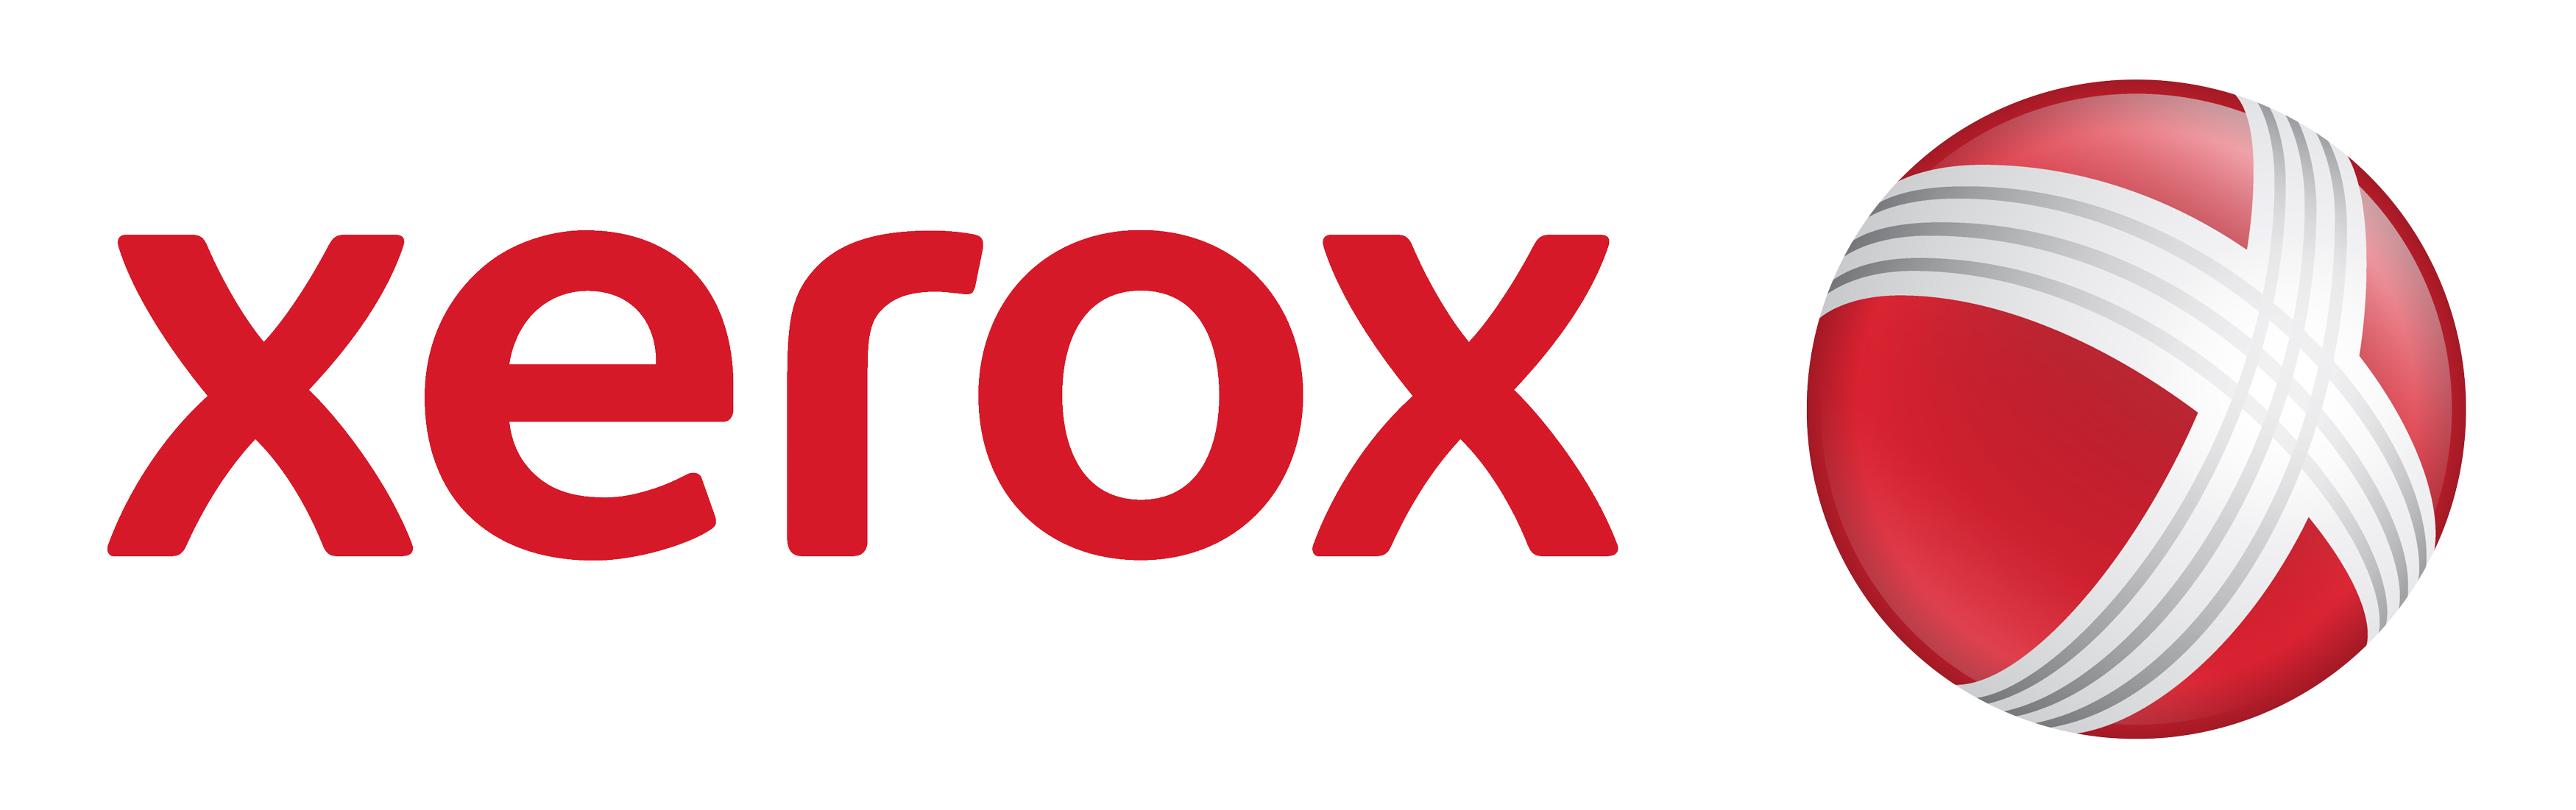 Xerox logo, logotype